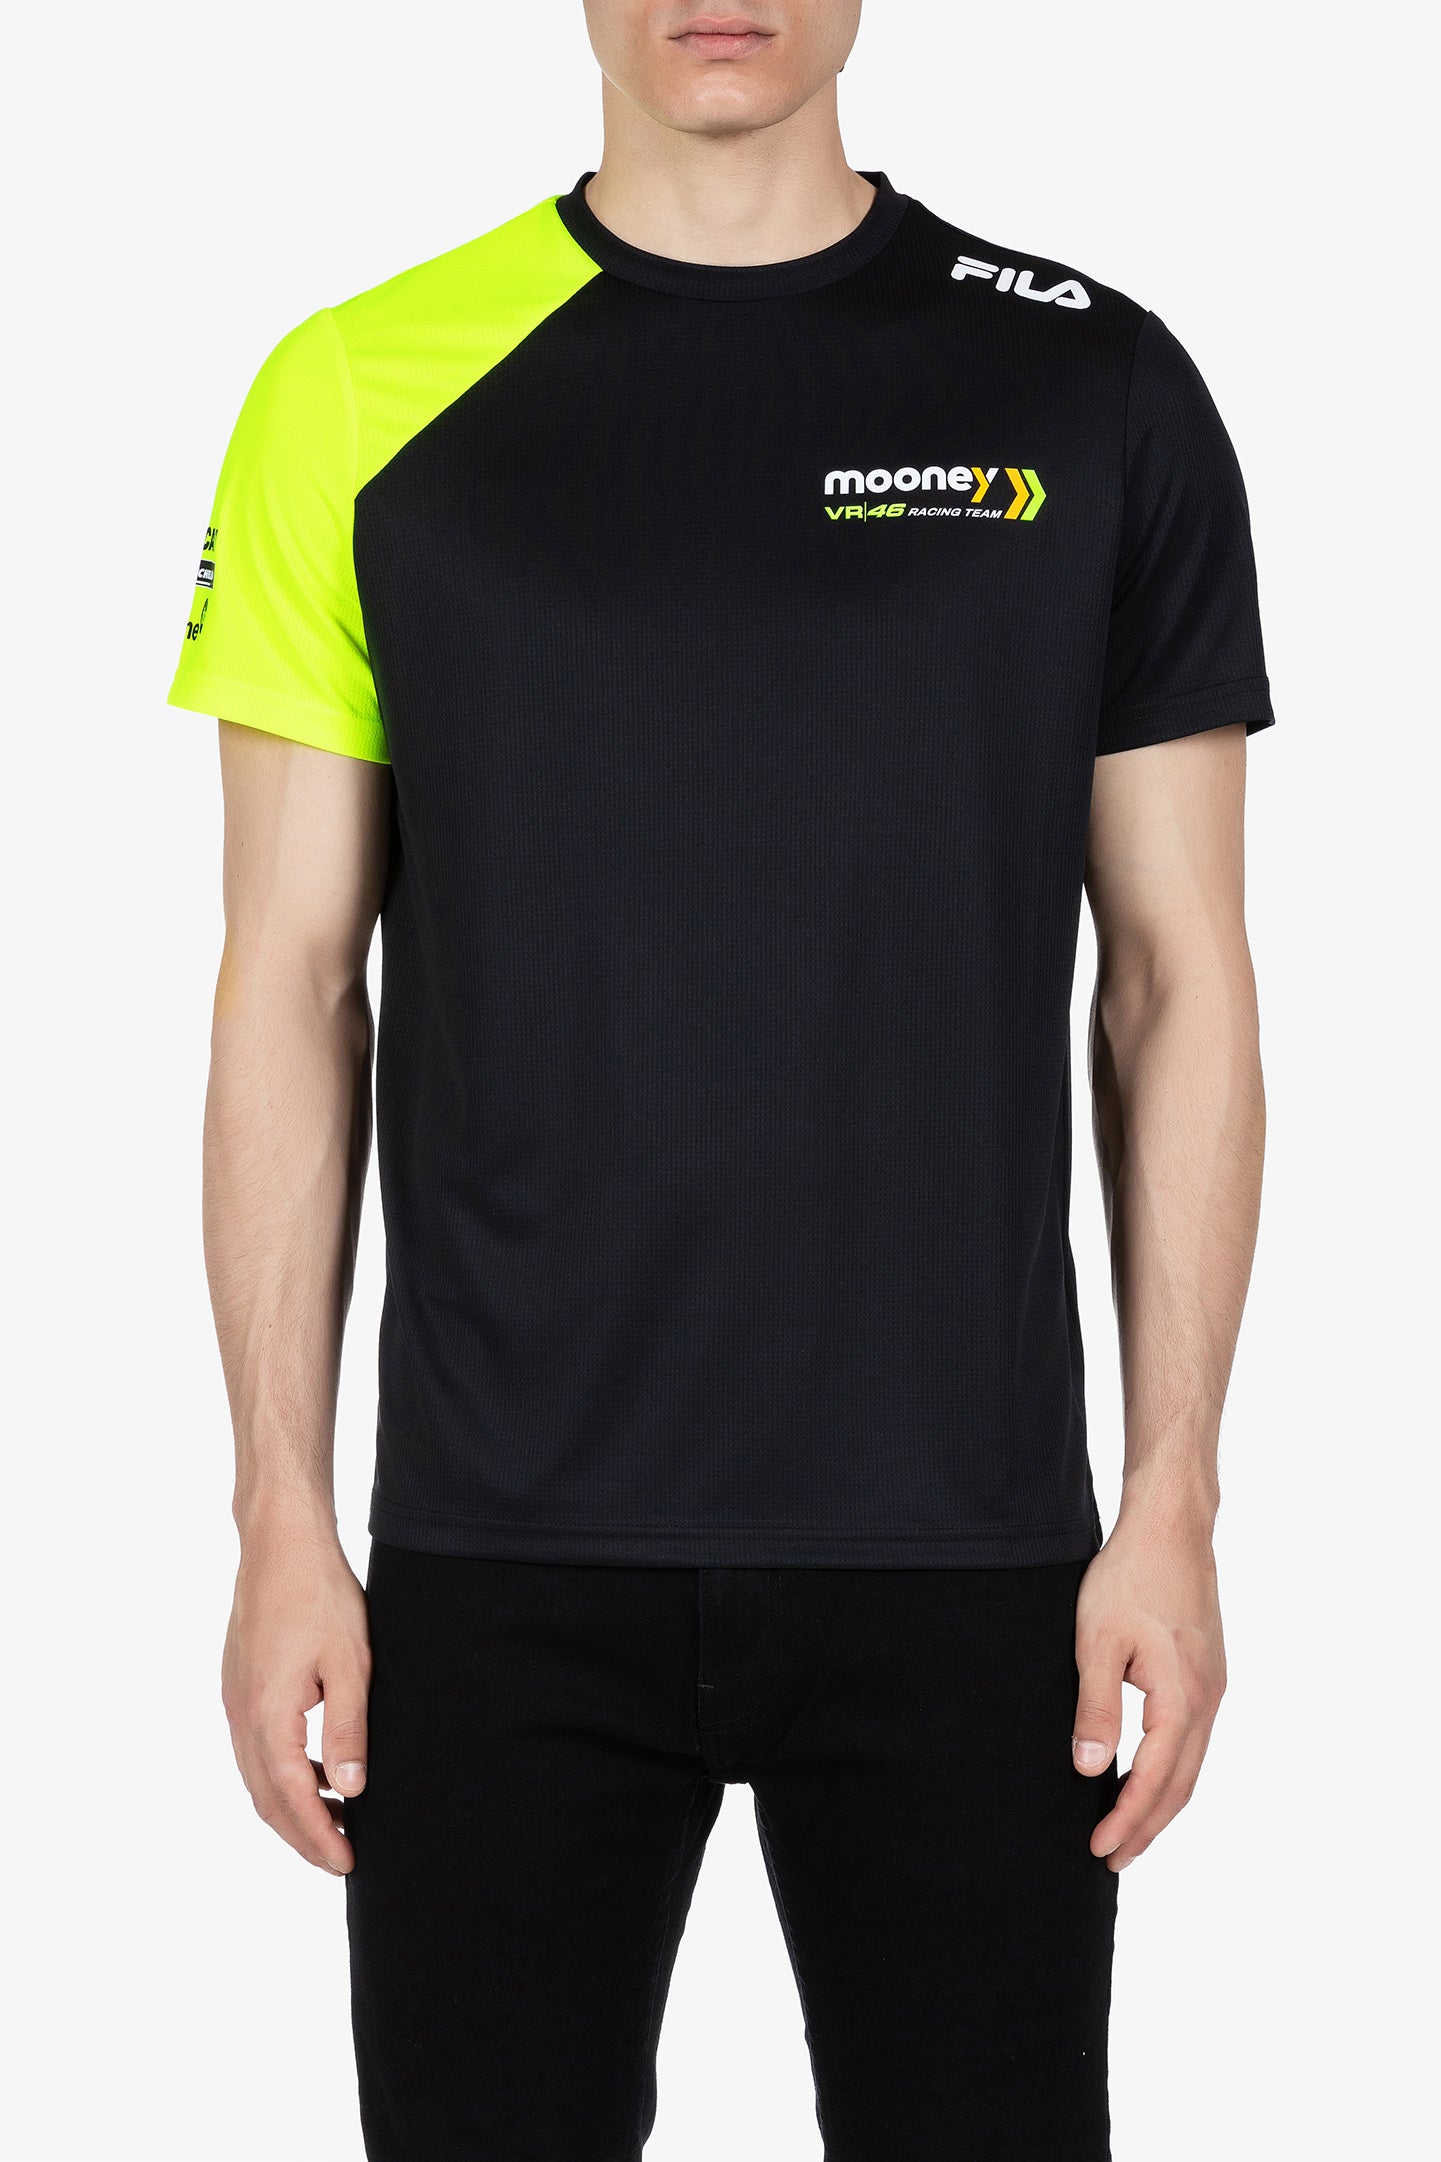 Mooney Racing Team replica t-shirt